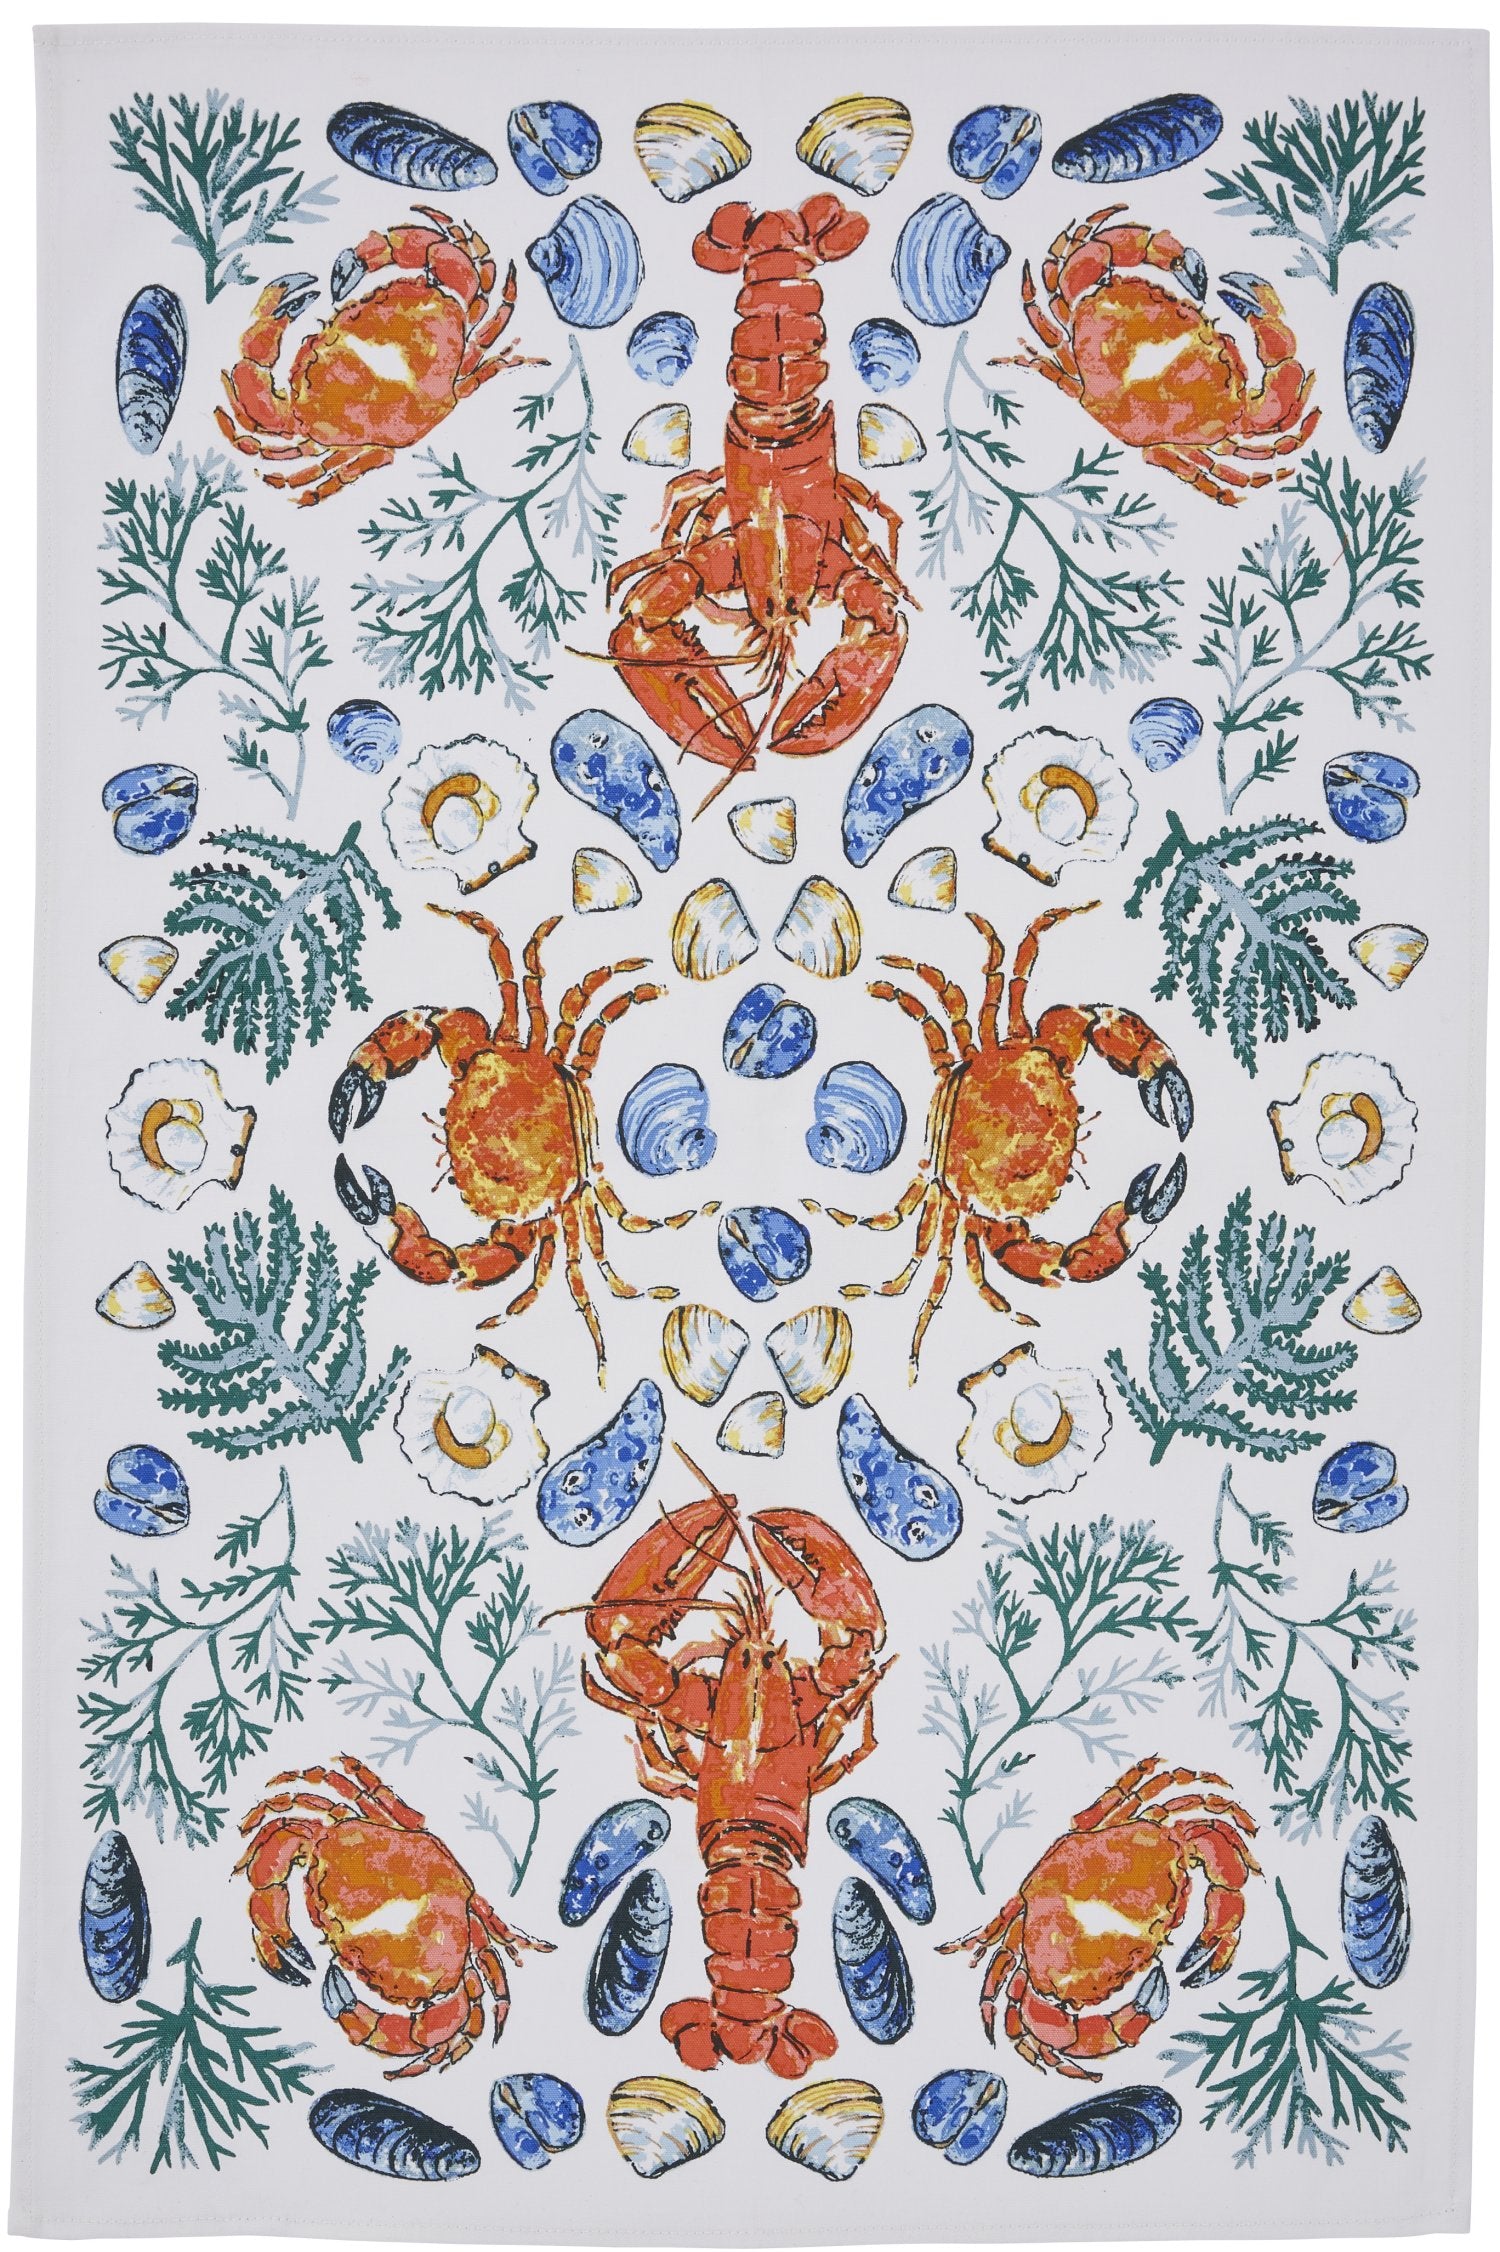 Ulster Weavers, "Shellfish", Printed cotton tea towel.